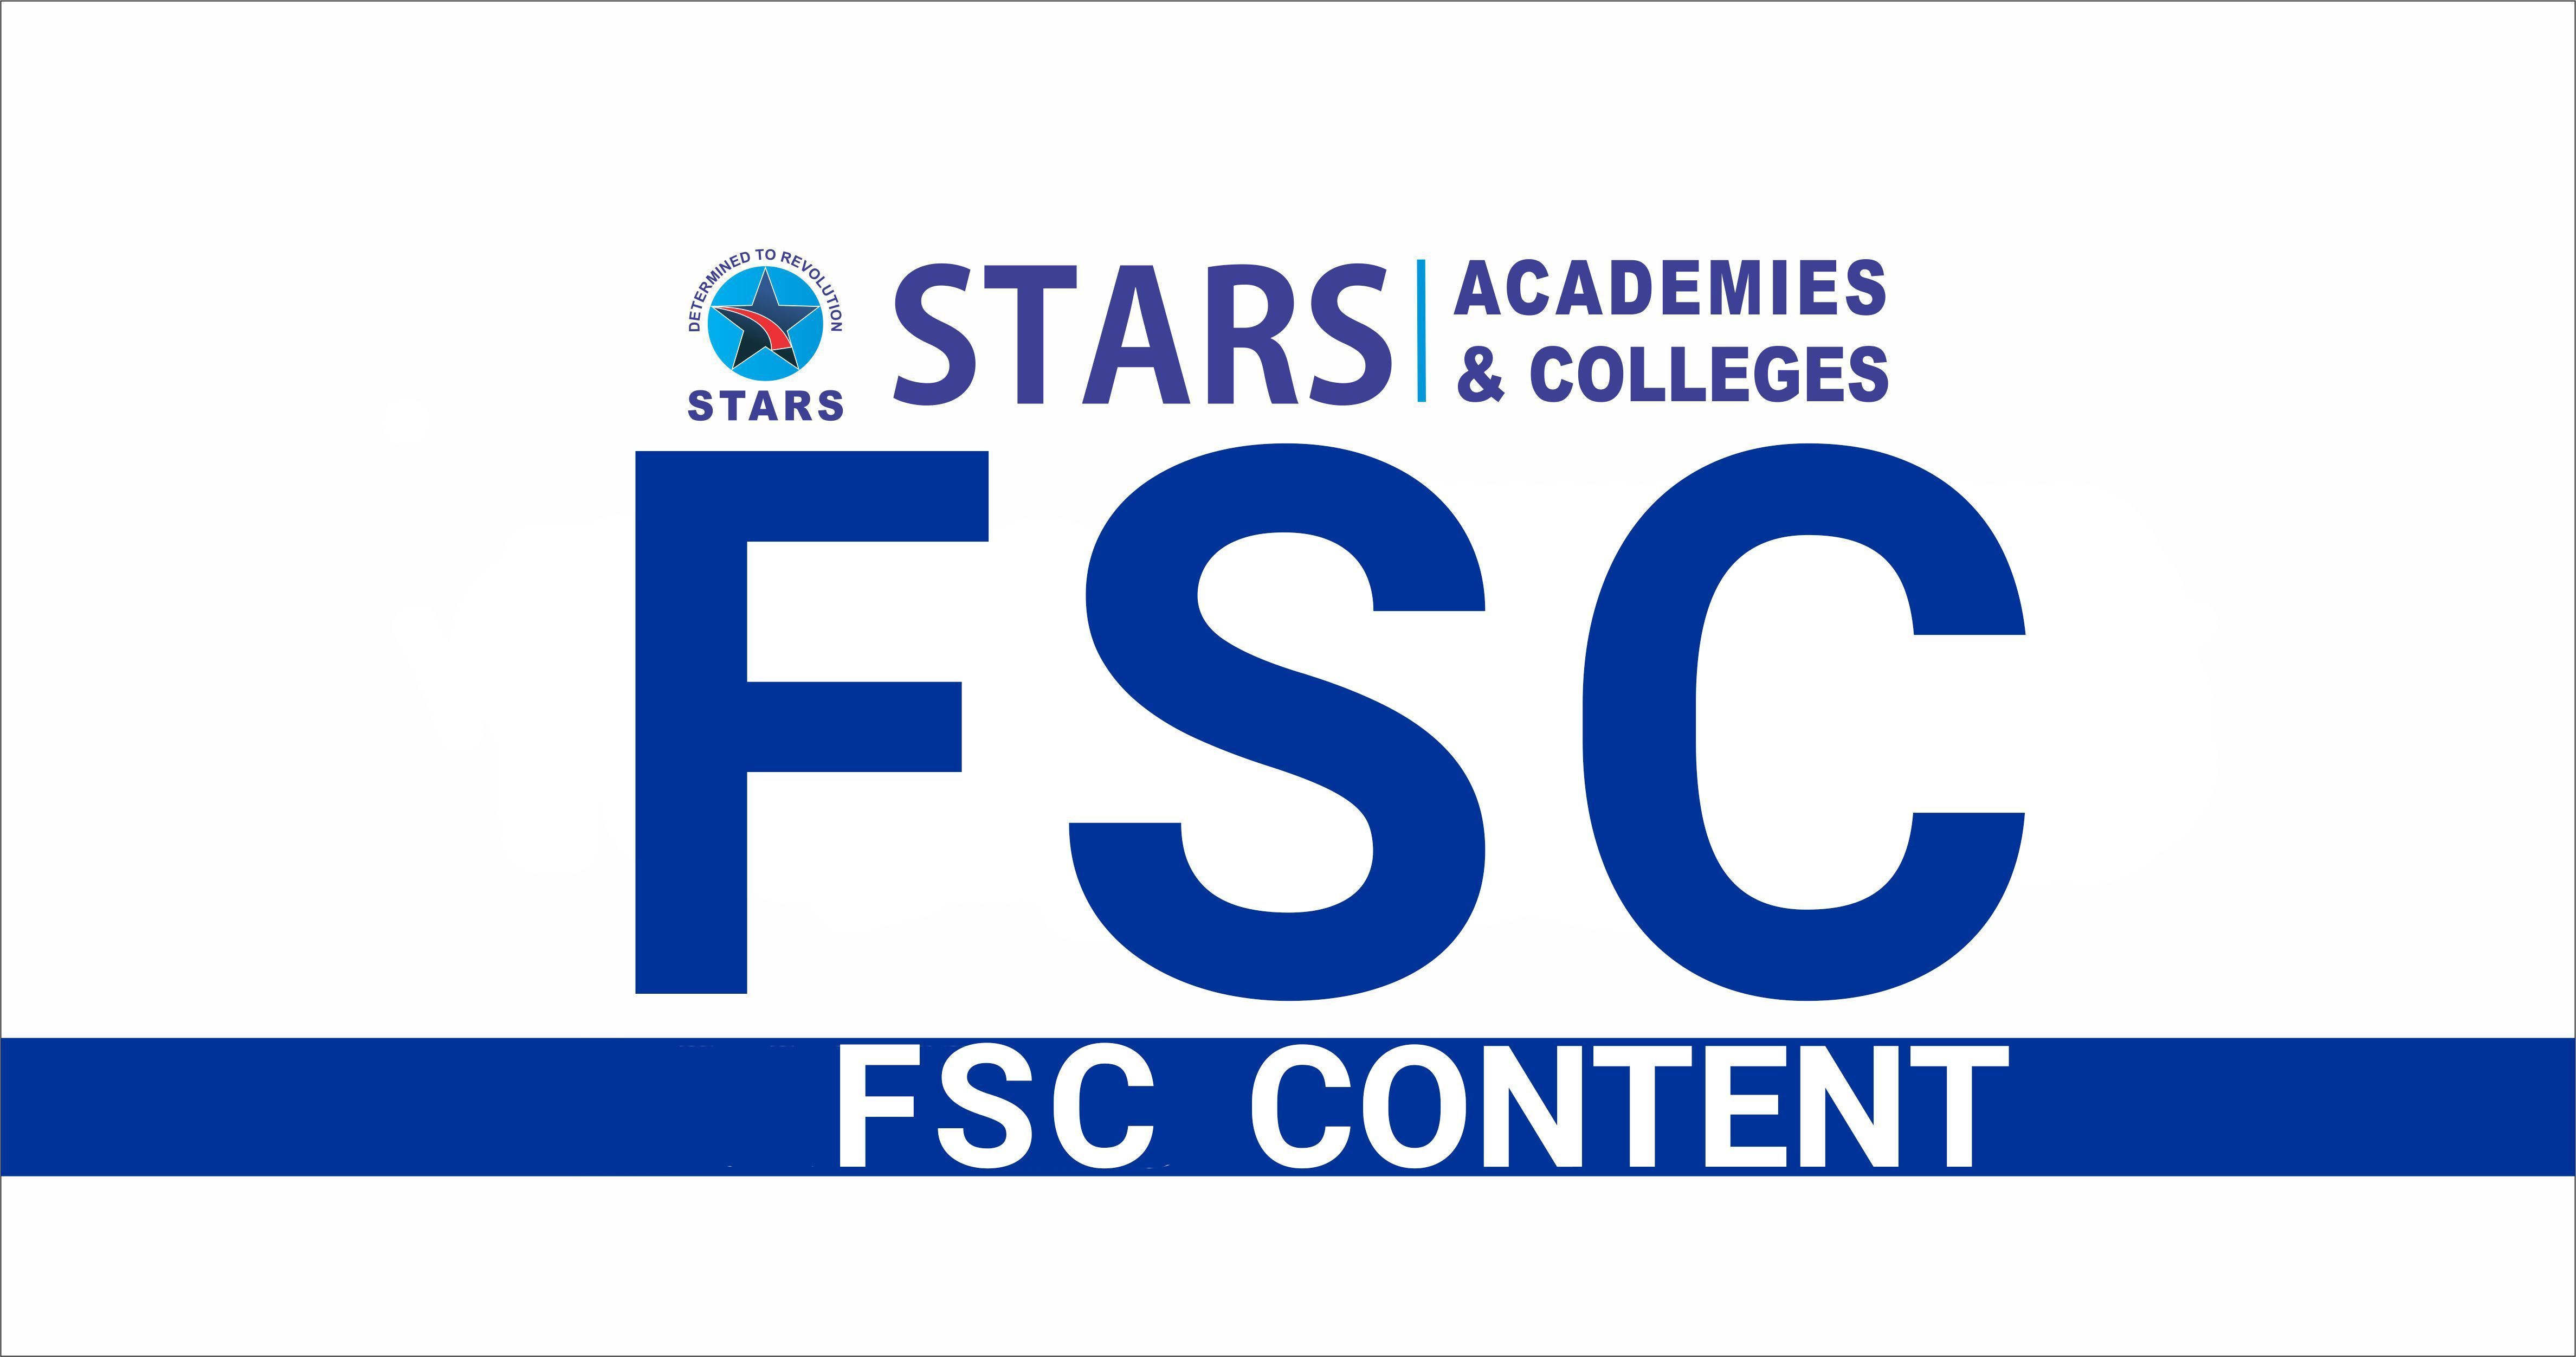 Stars Academy FSC Information